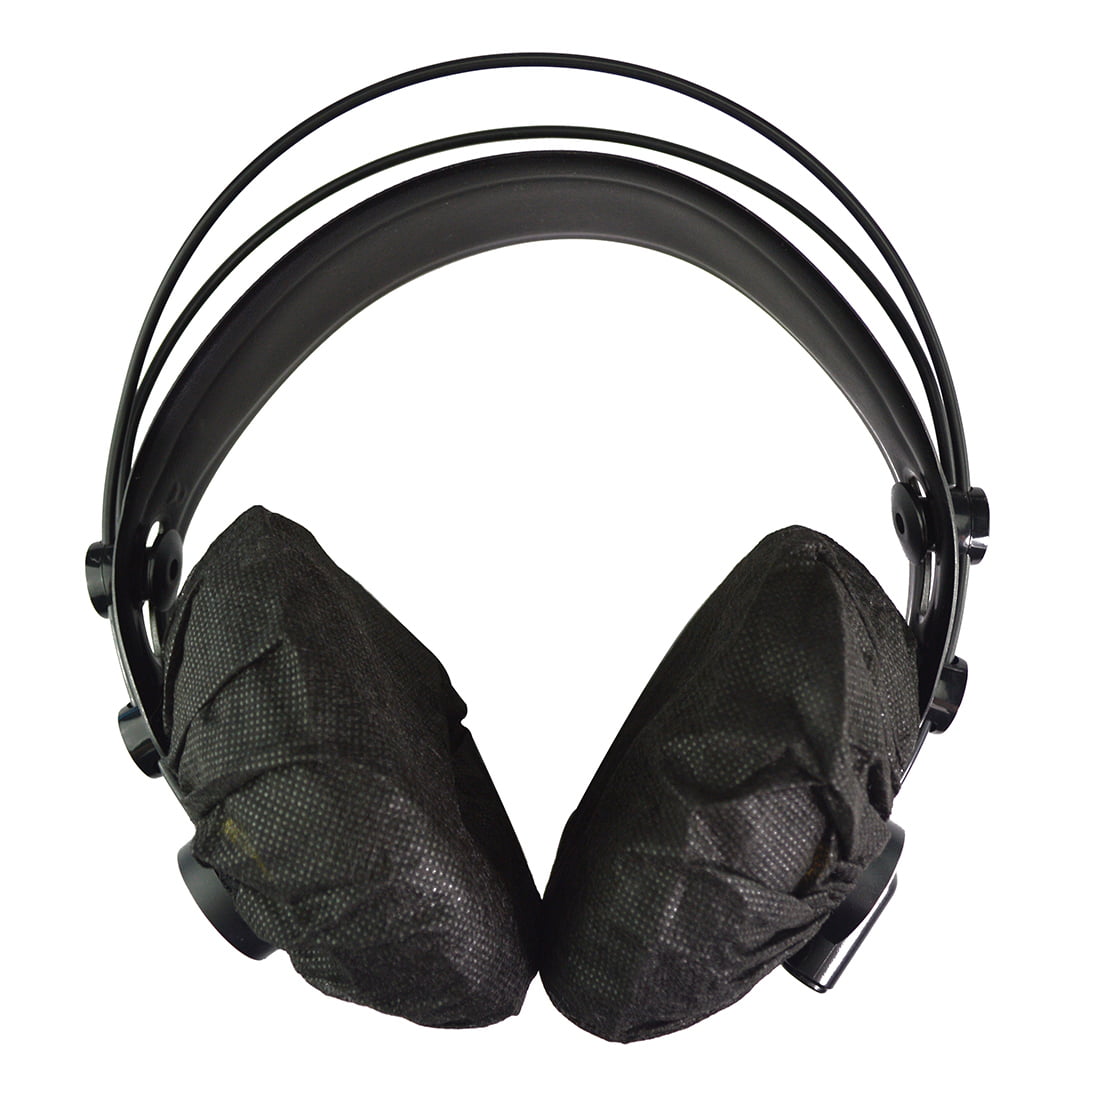 Large Stretchable Headphone Covers fits Earmuff-style headphones Bag of 100 Black